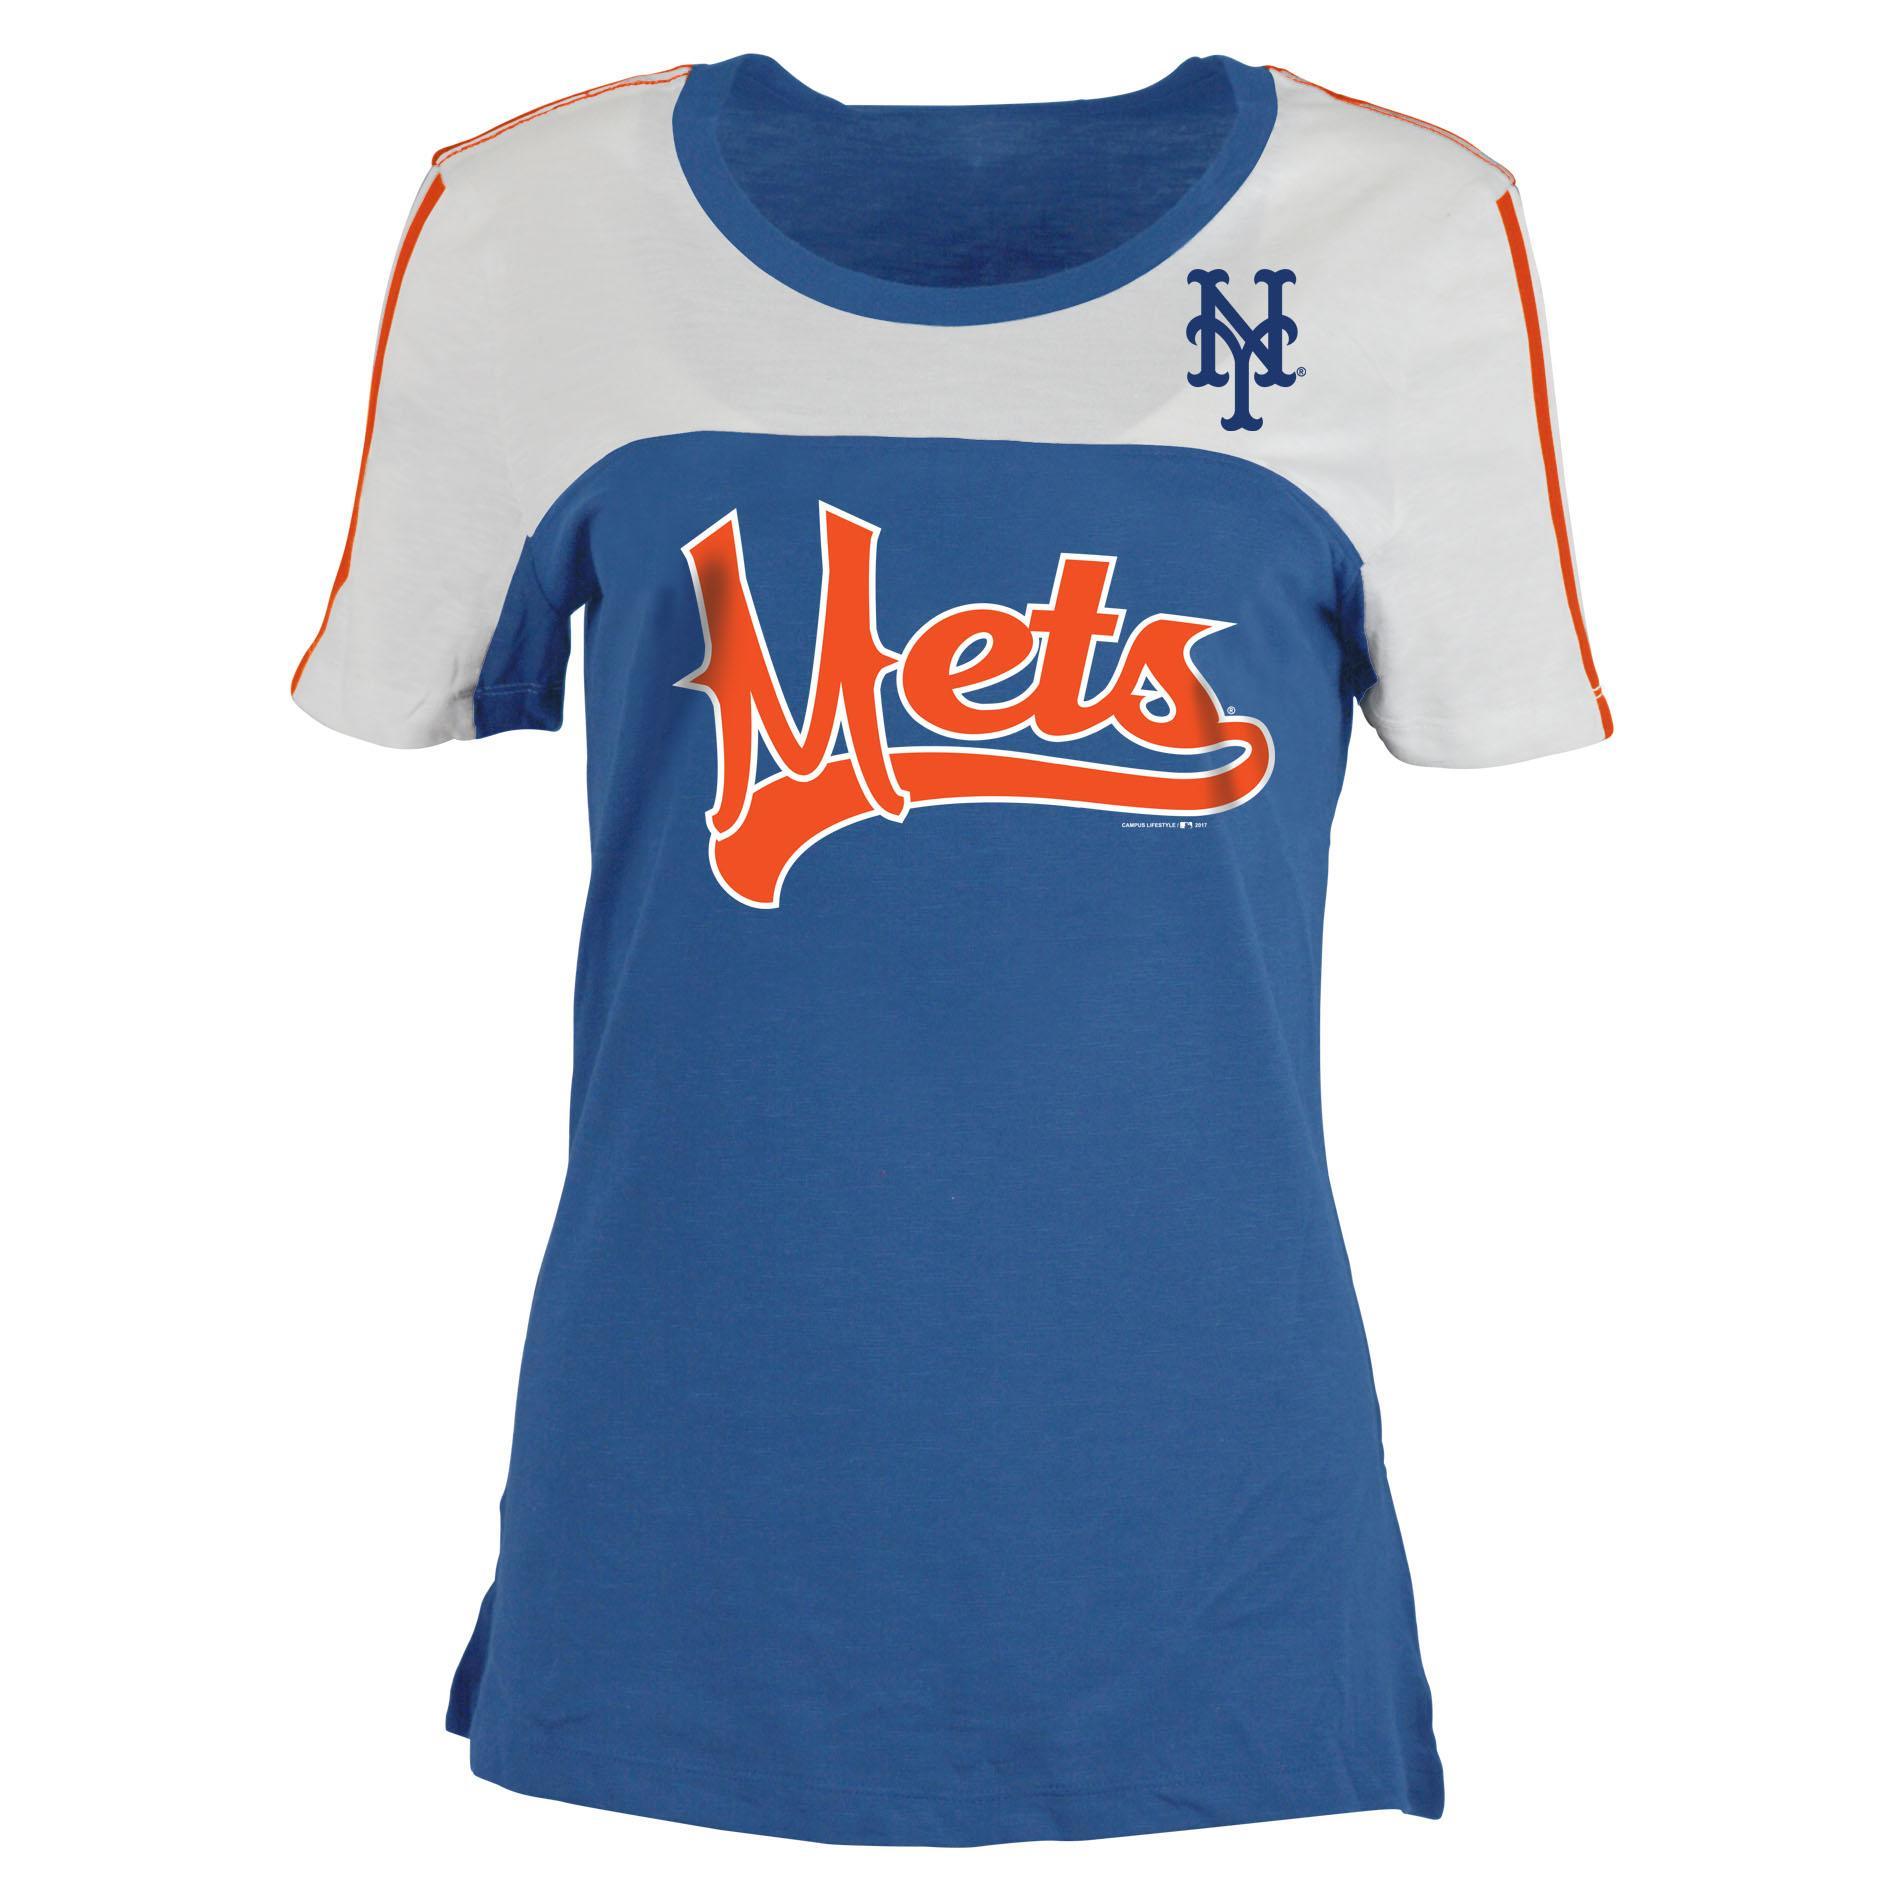 MLB Women's Jersey T-Shirt - New York Mets